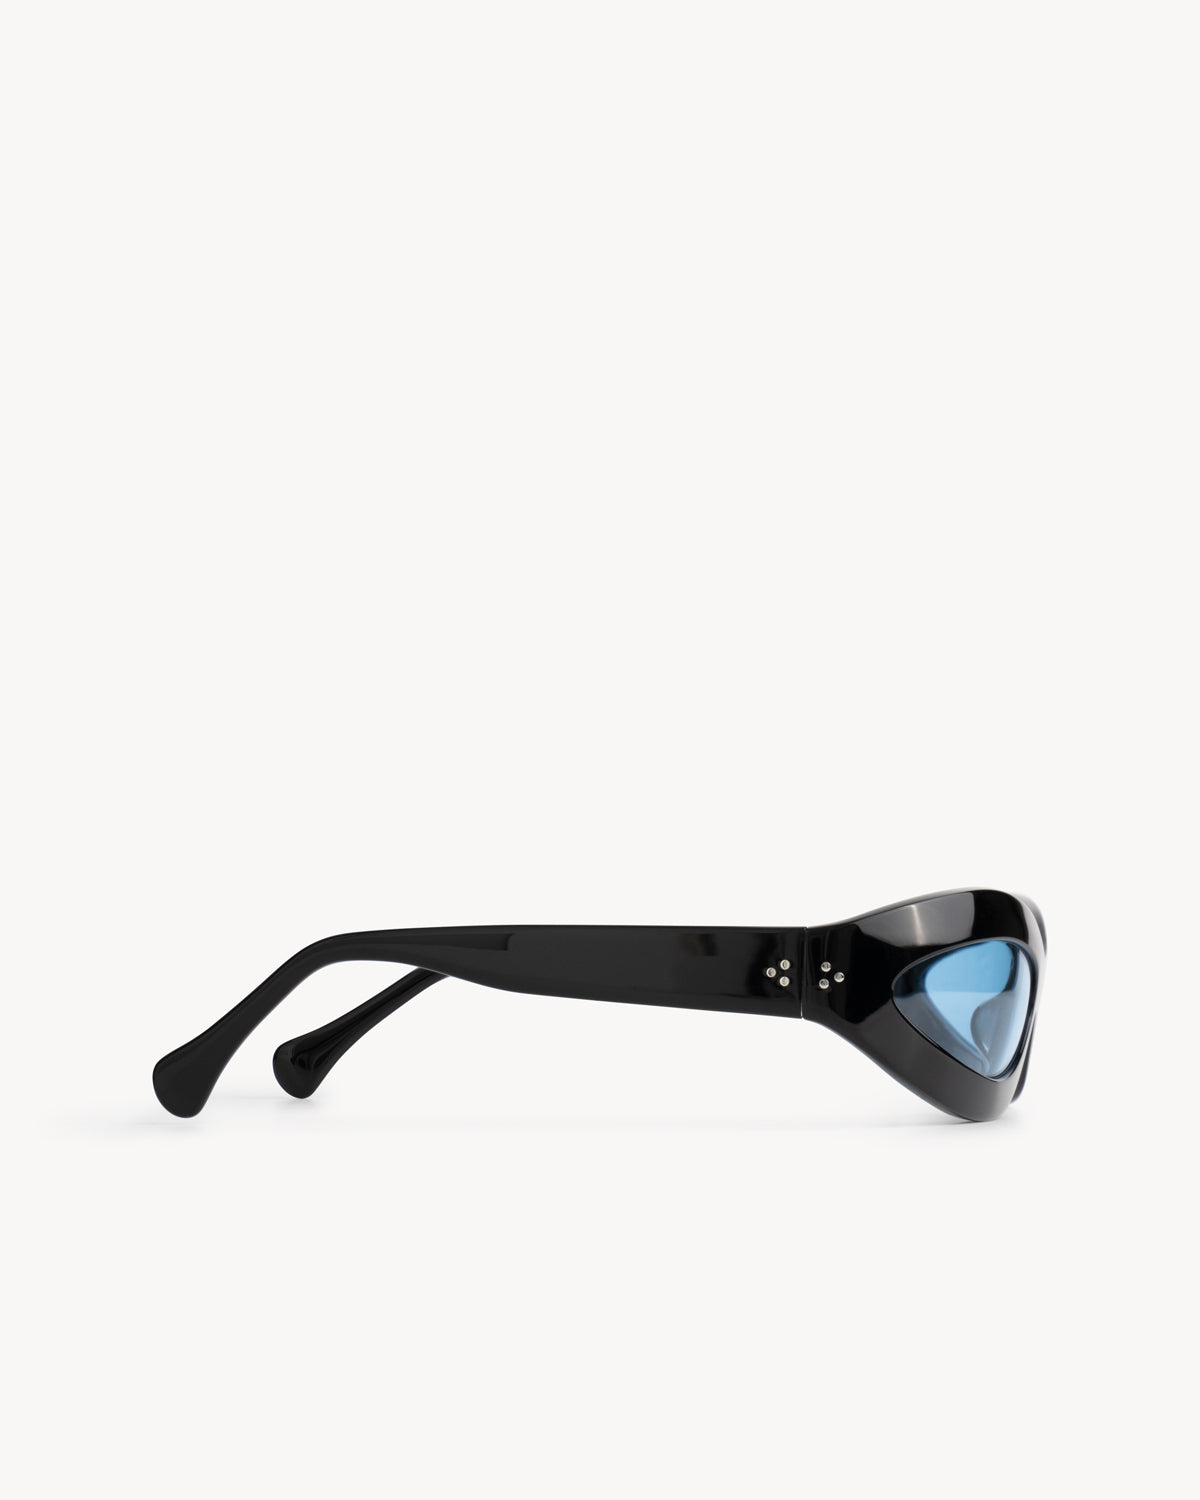 Port Tanger Summa Sunglasses in Black Acetate and Rif Blue Lenses 4